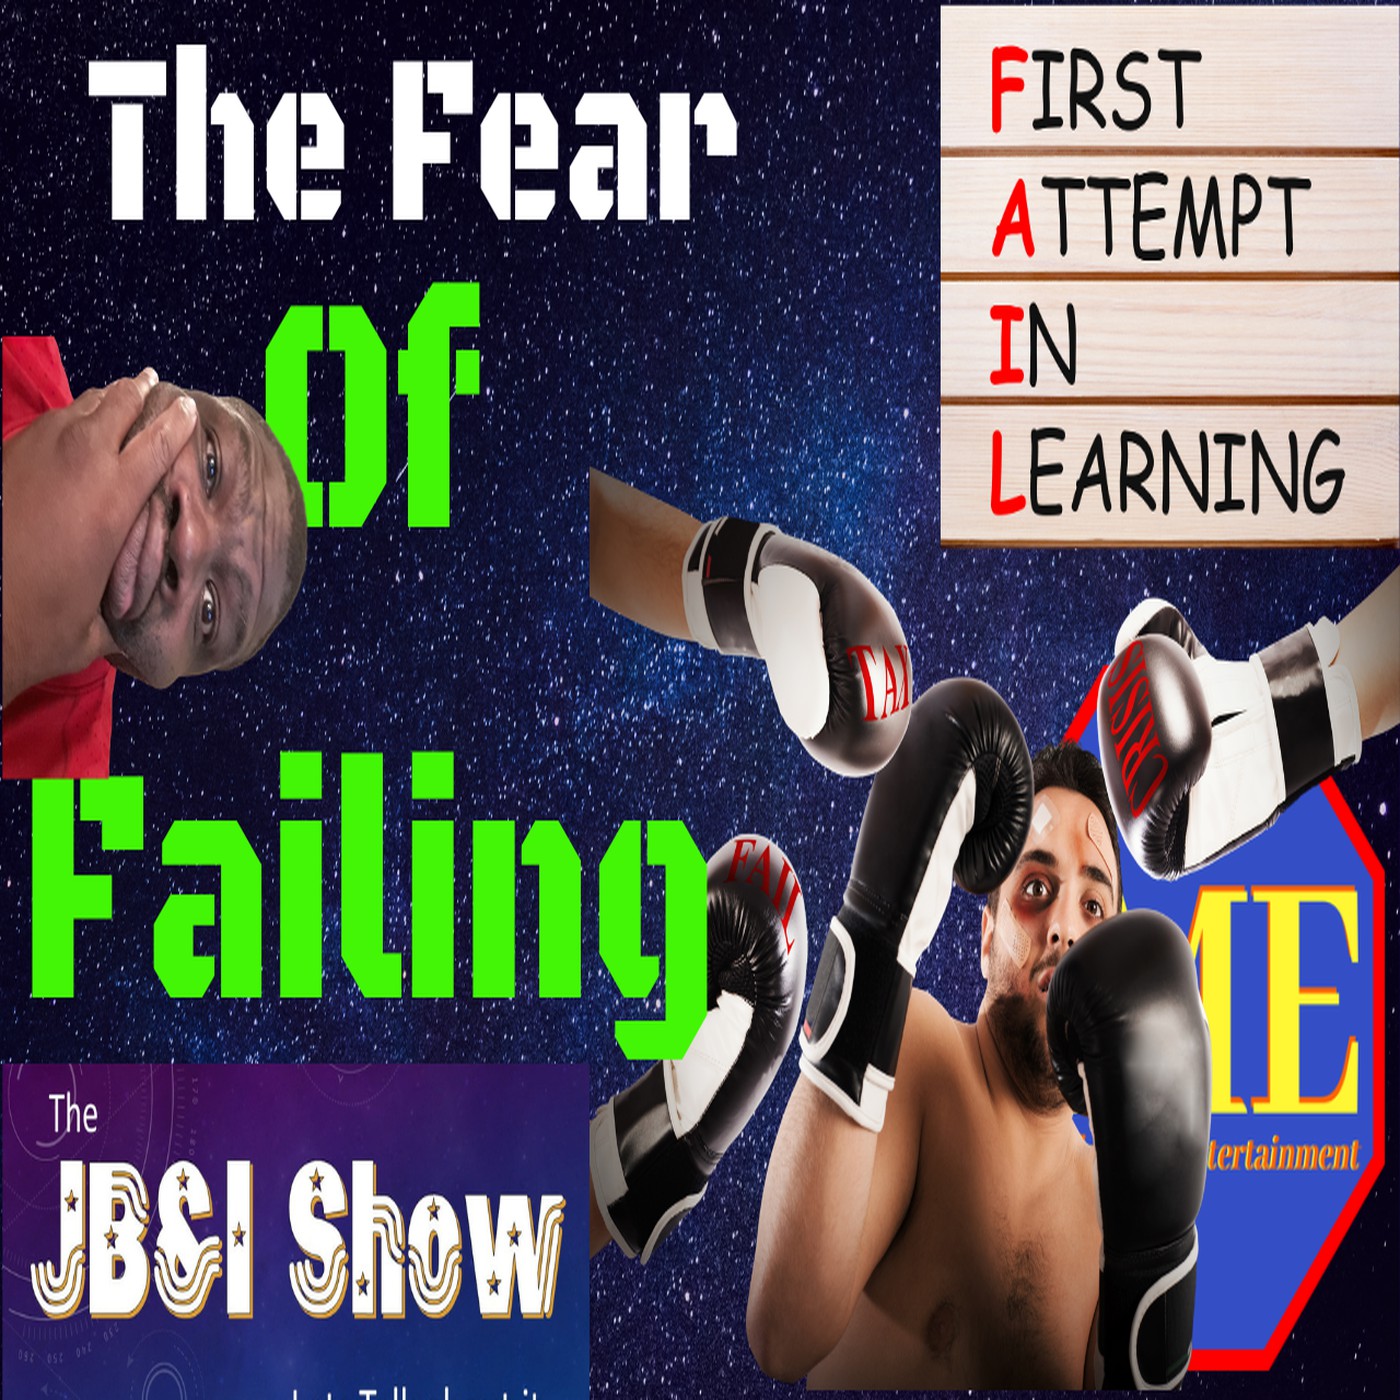 The JB&I Show Podcast